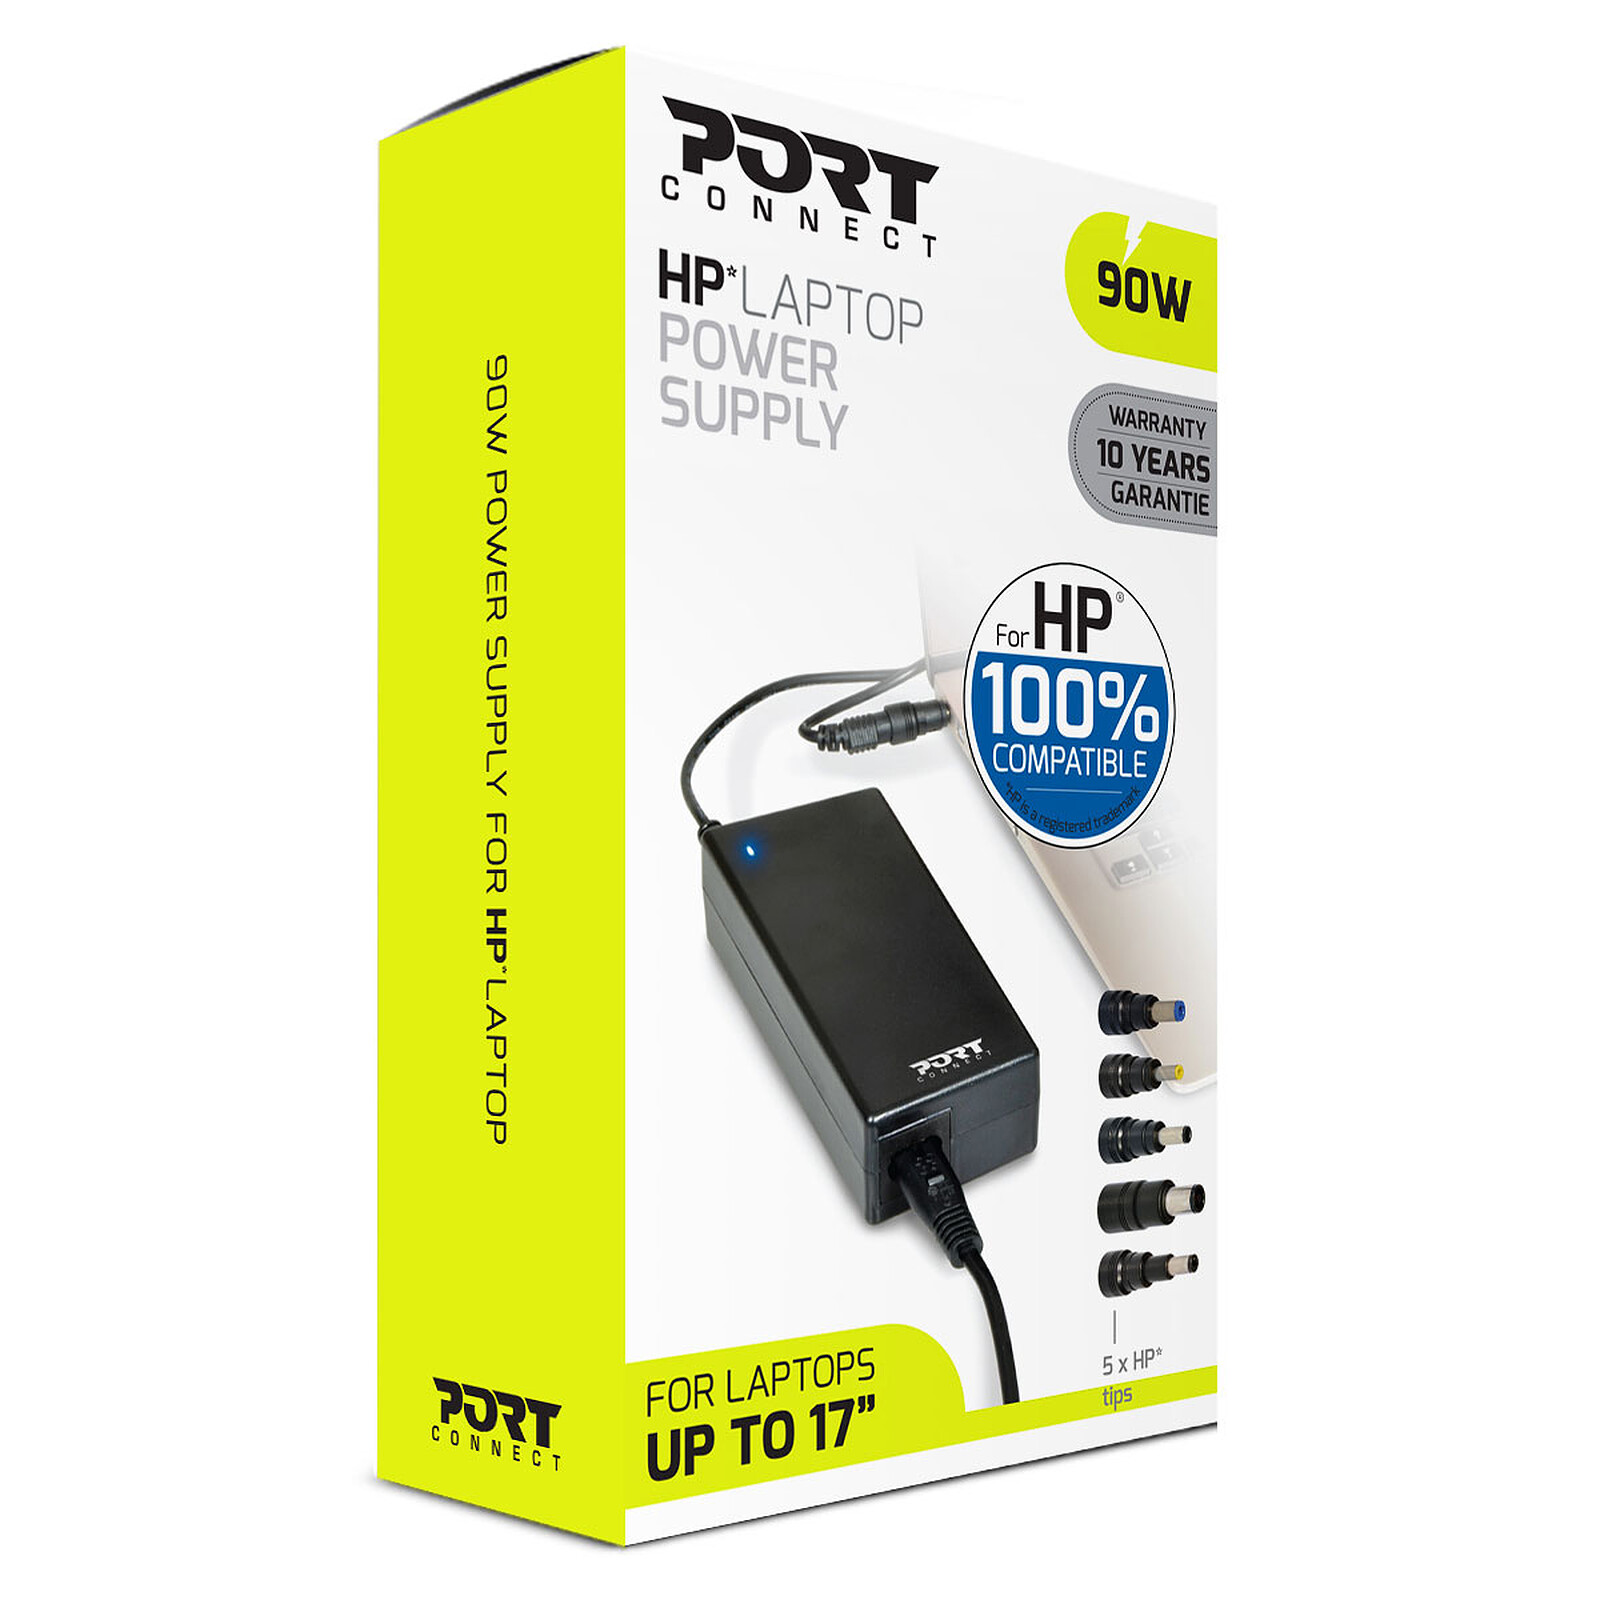 Port Connect HP Power Supply (90W) - Caricabatterie PC portatile - Garanzia  3 anni LDLC